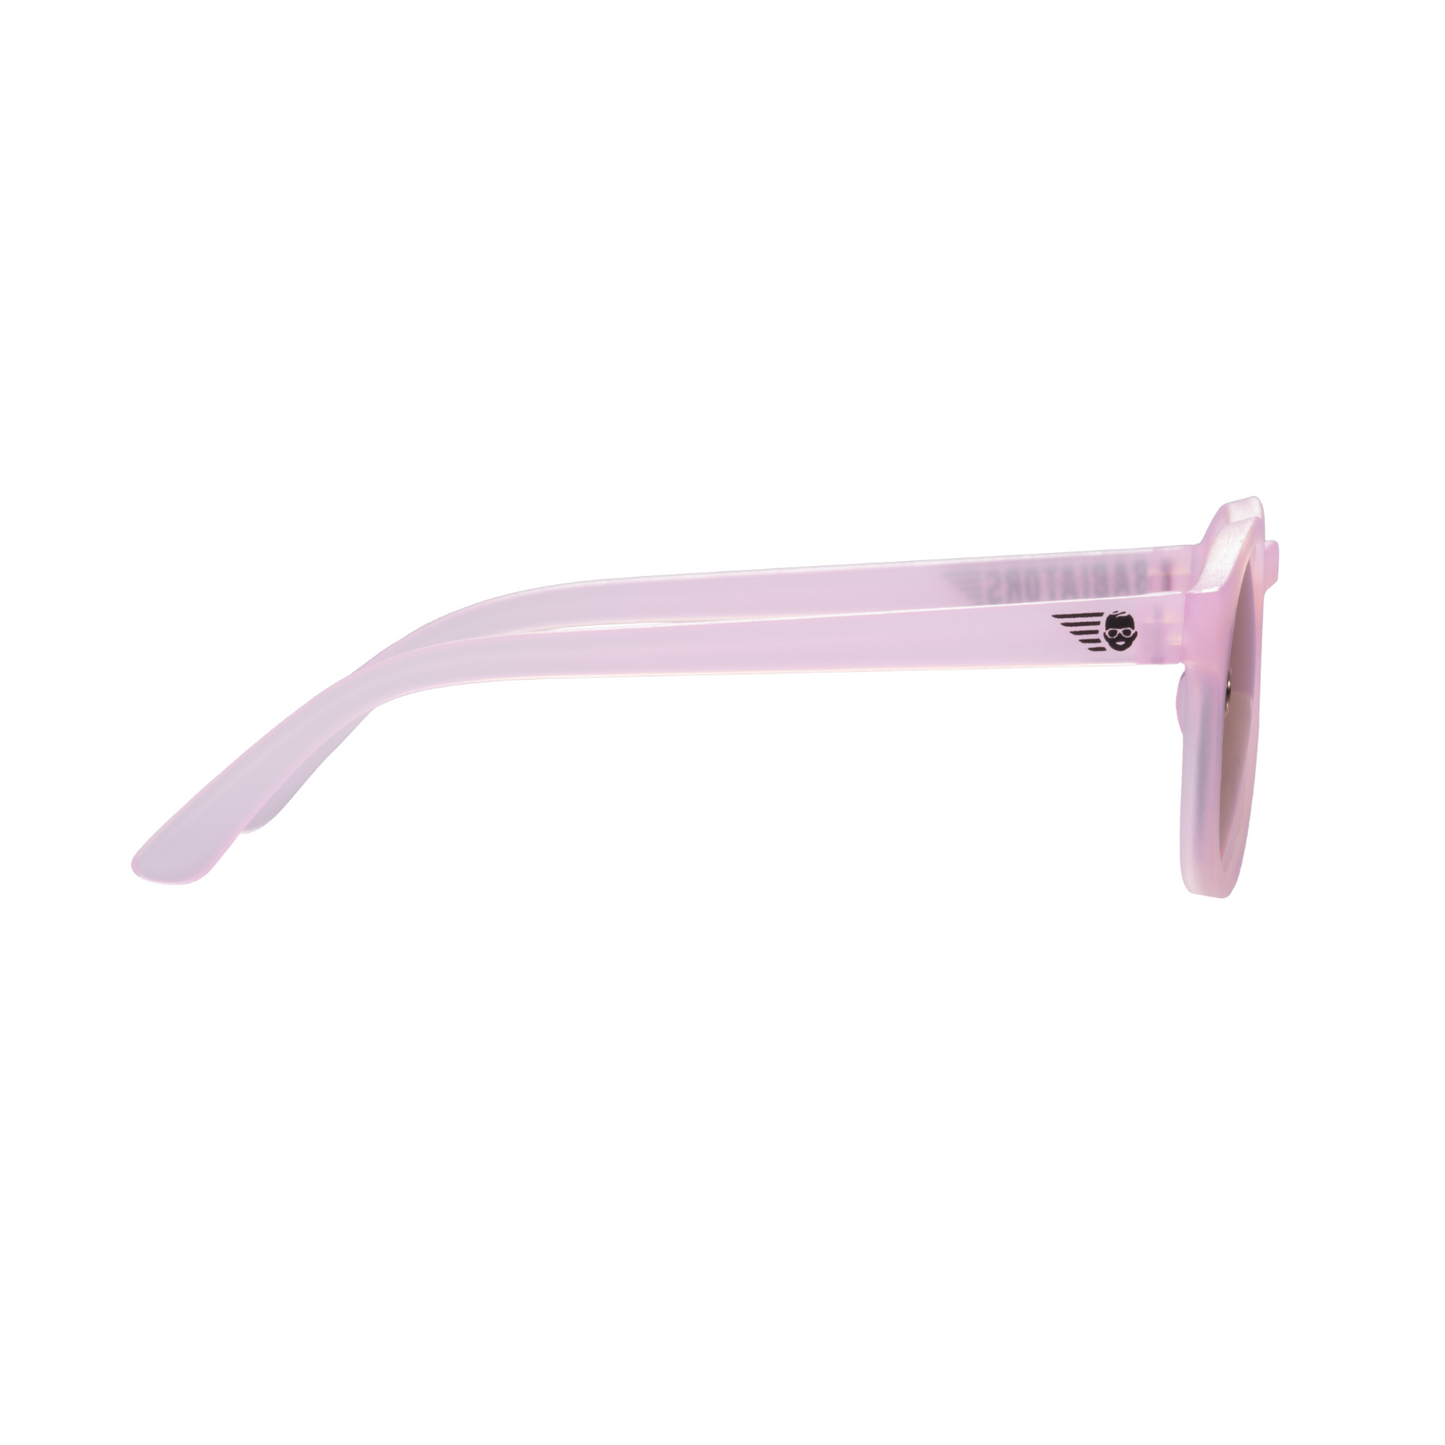 The Pixie: Pink Transparent Keyhole w/ Polarized Rose Gold Lens Sunglasses